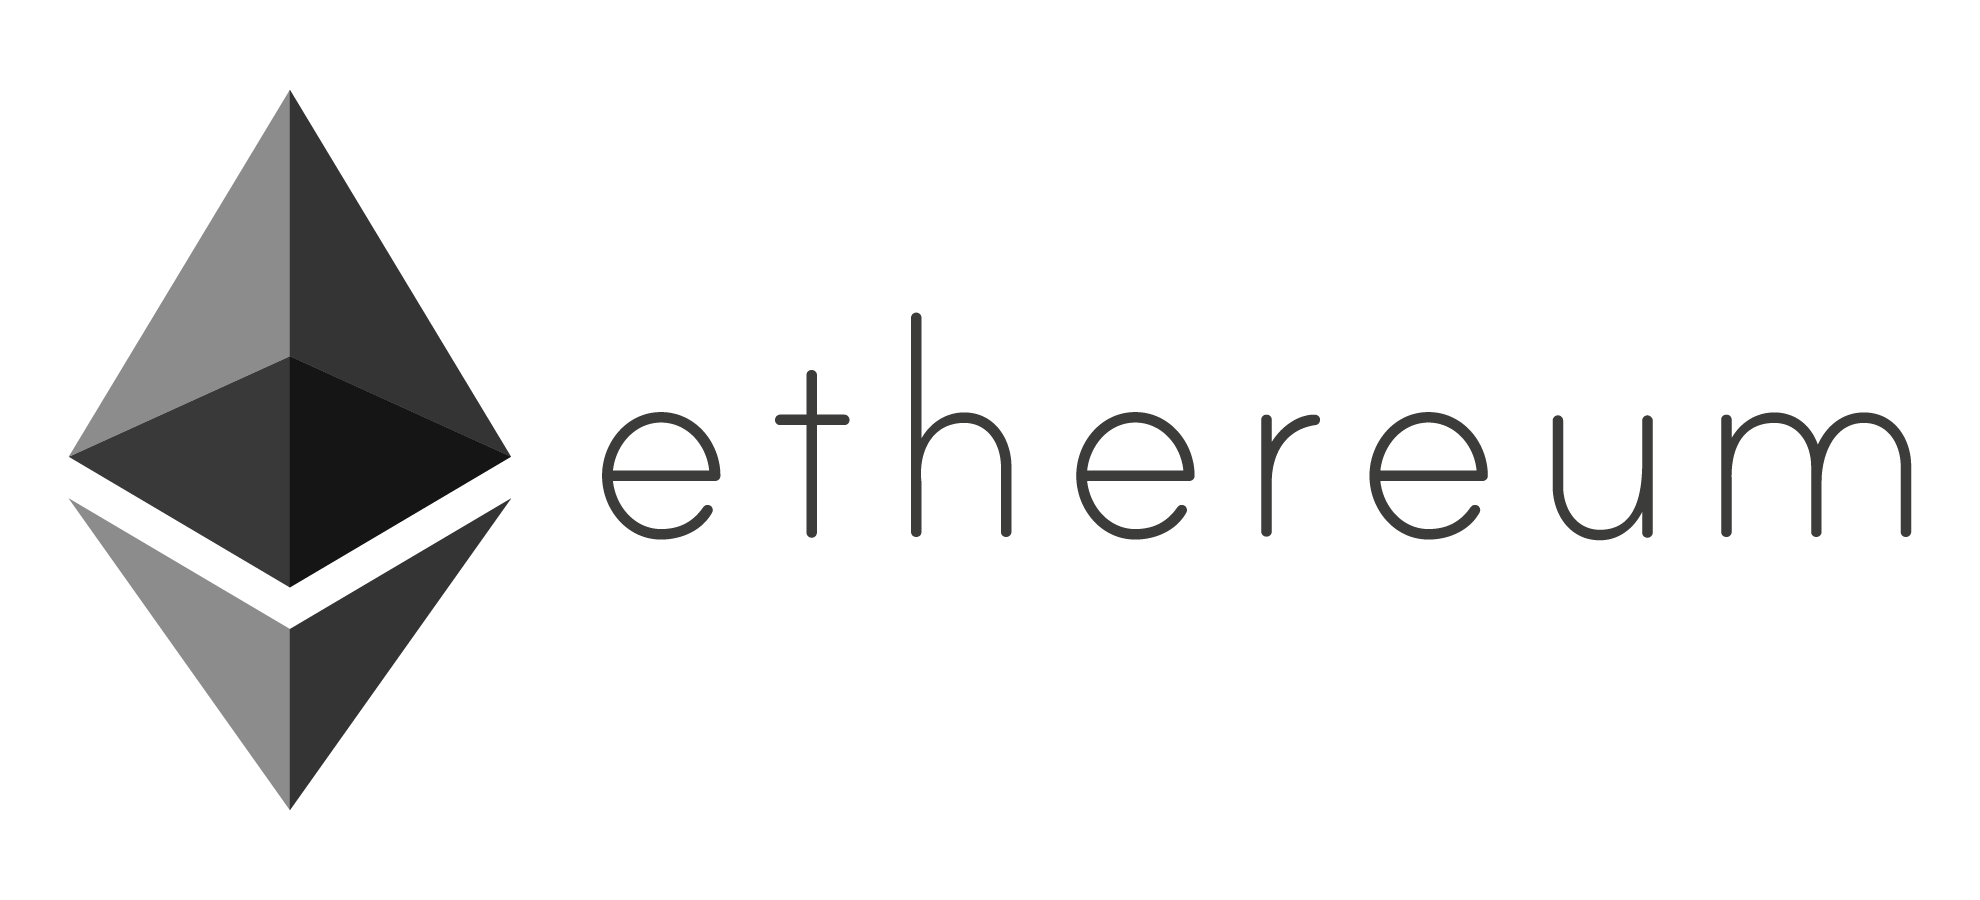 Ethereum Logo - ethereum logo. Free Vector Icon And Symbols